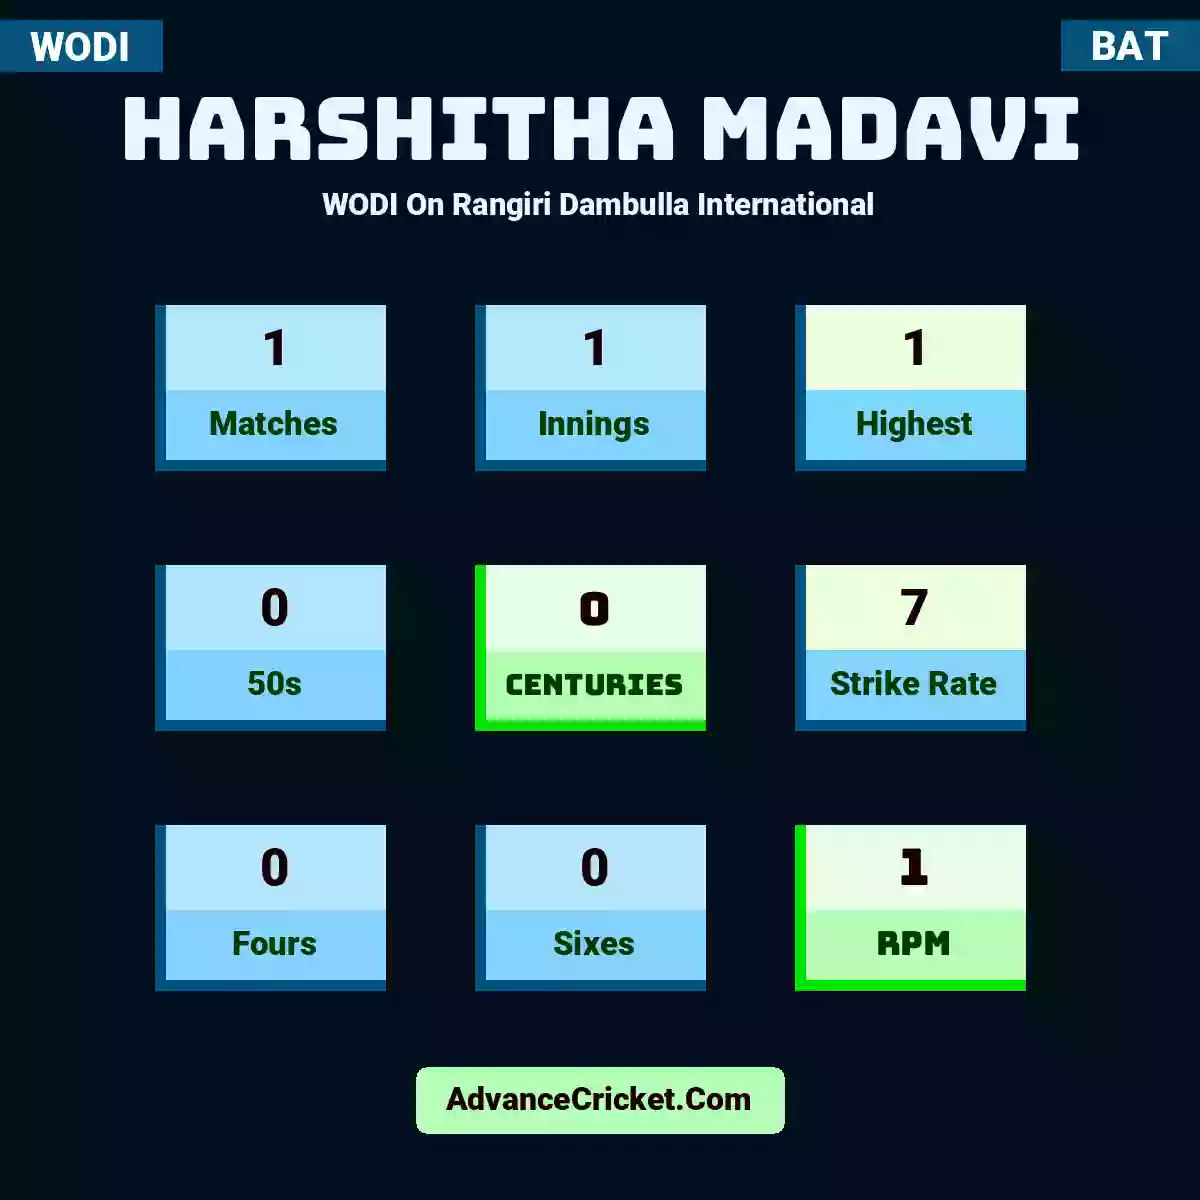 Harshitha Madavi WODI  On Rangiri Dambulla International, Harshitha Madavi played 1 matches, scored 1 runs as highest, 0 half-centuries, and 0 centuries, with a strike rate of 7. H.Madavi hit 0 fours and 0 sixes, with an RPM of 1.